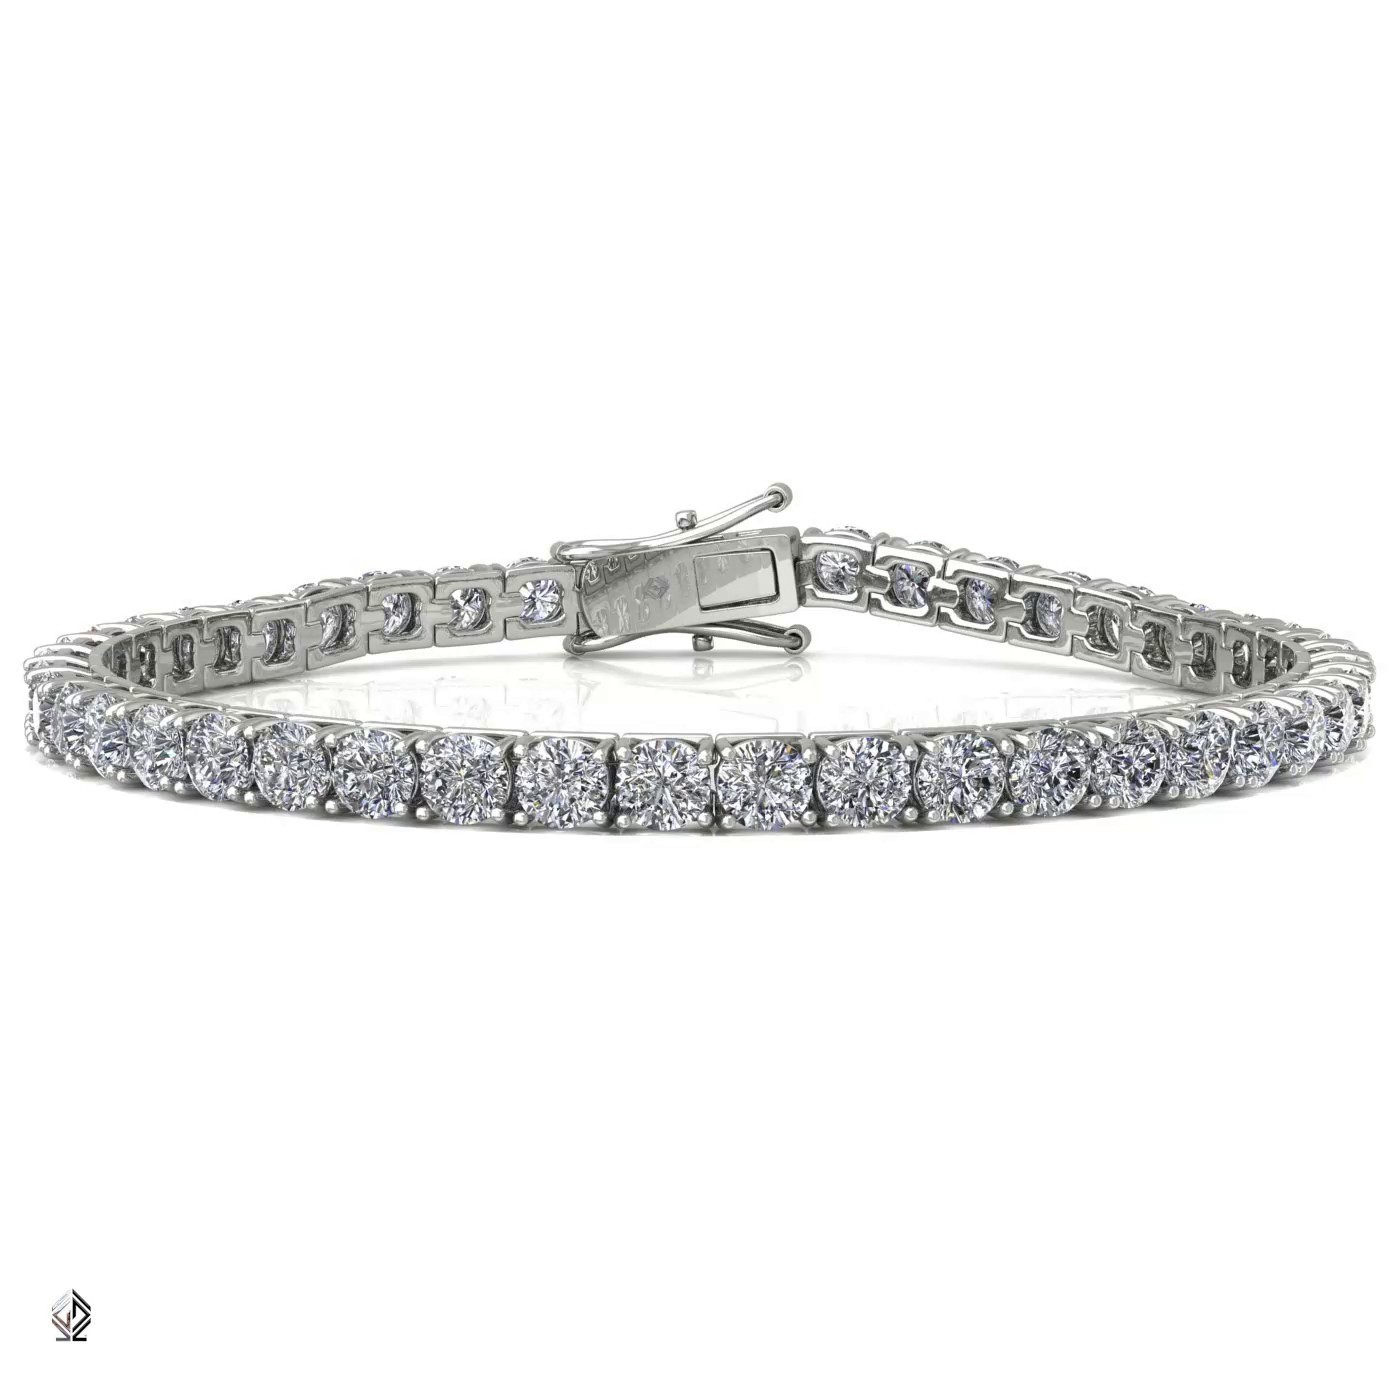 18k white gold 2.6mm 4 prong round shape diamond tennis bracelet in square setting Photos & images